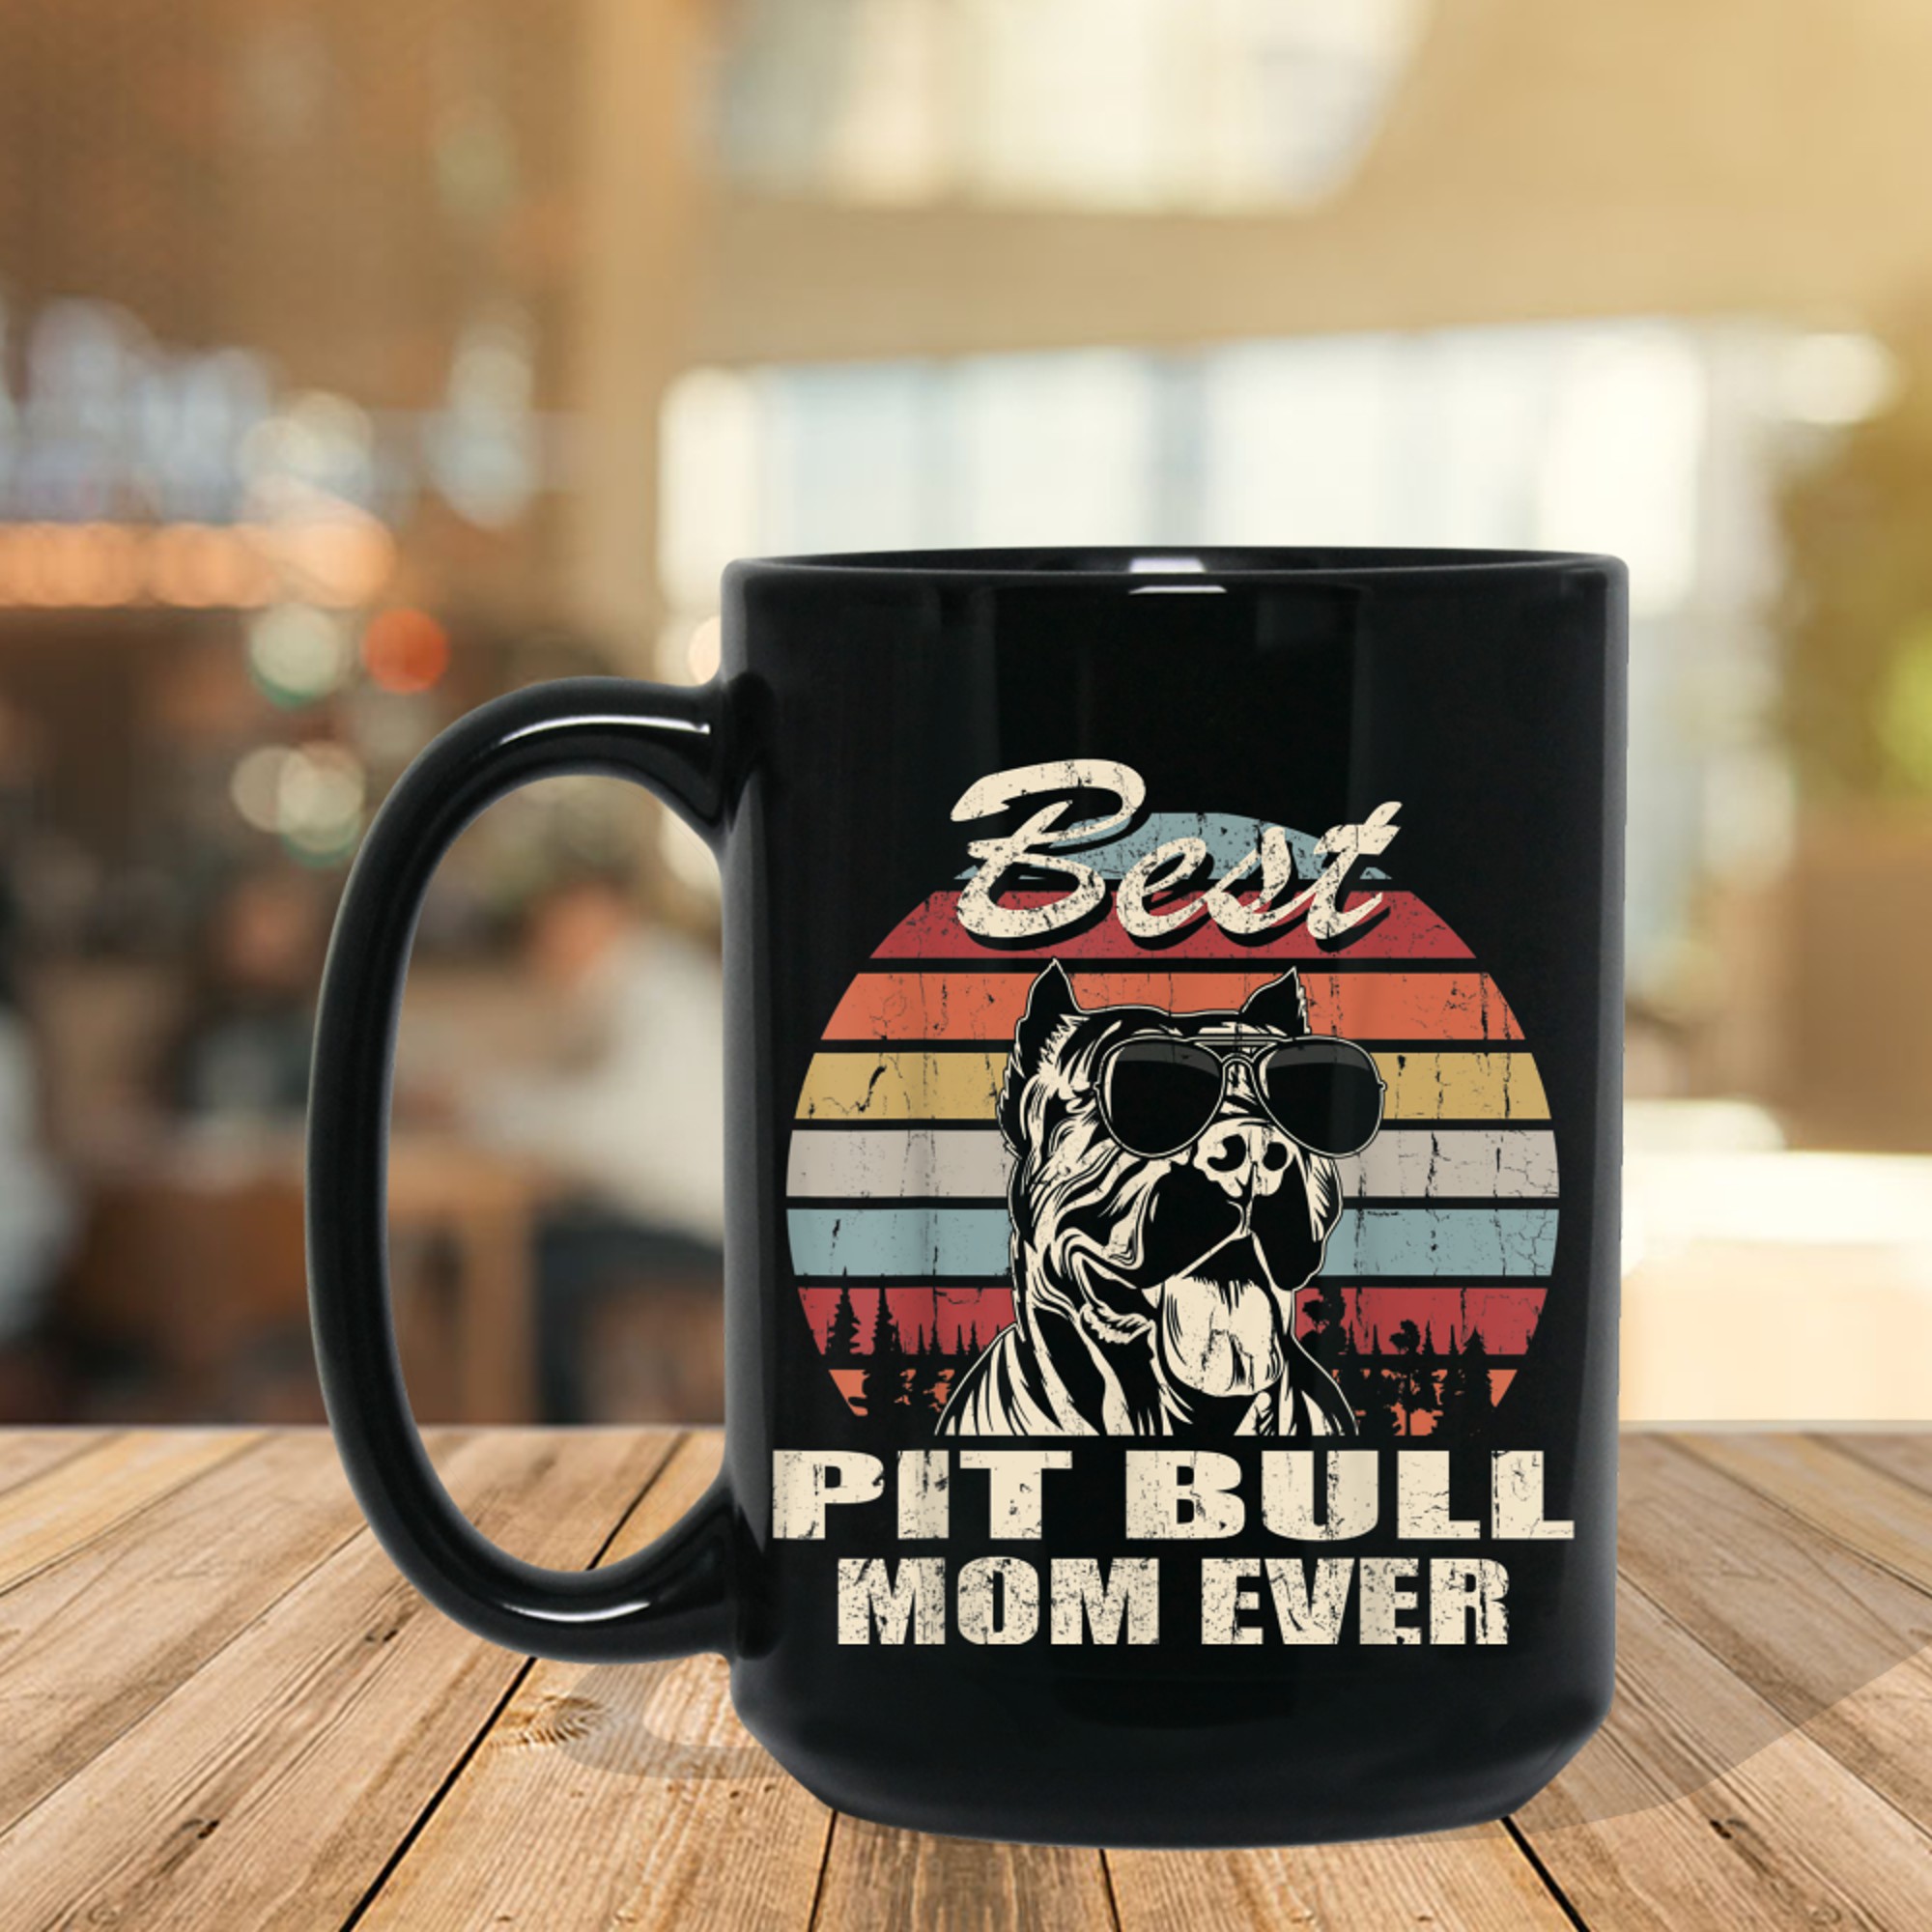 Best Pit Bull Mom Ever Vintage Retro Dog Mom mug black